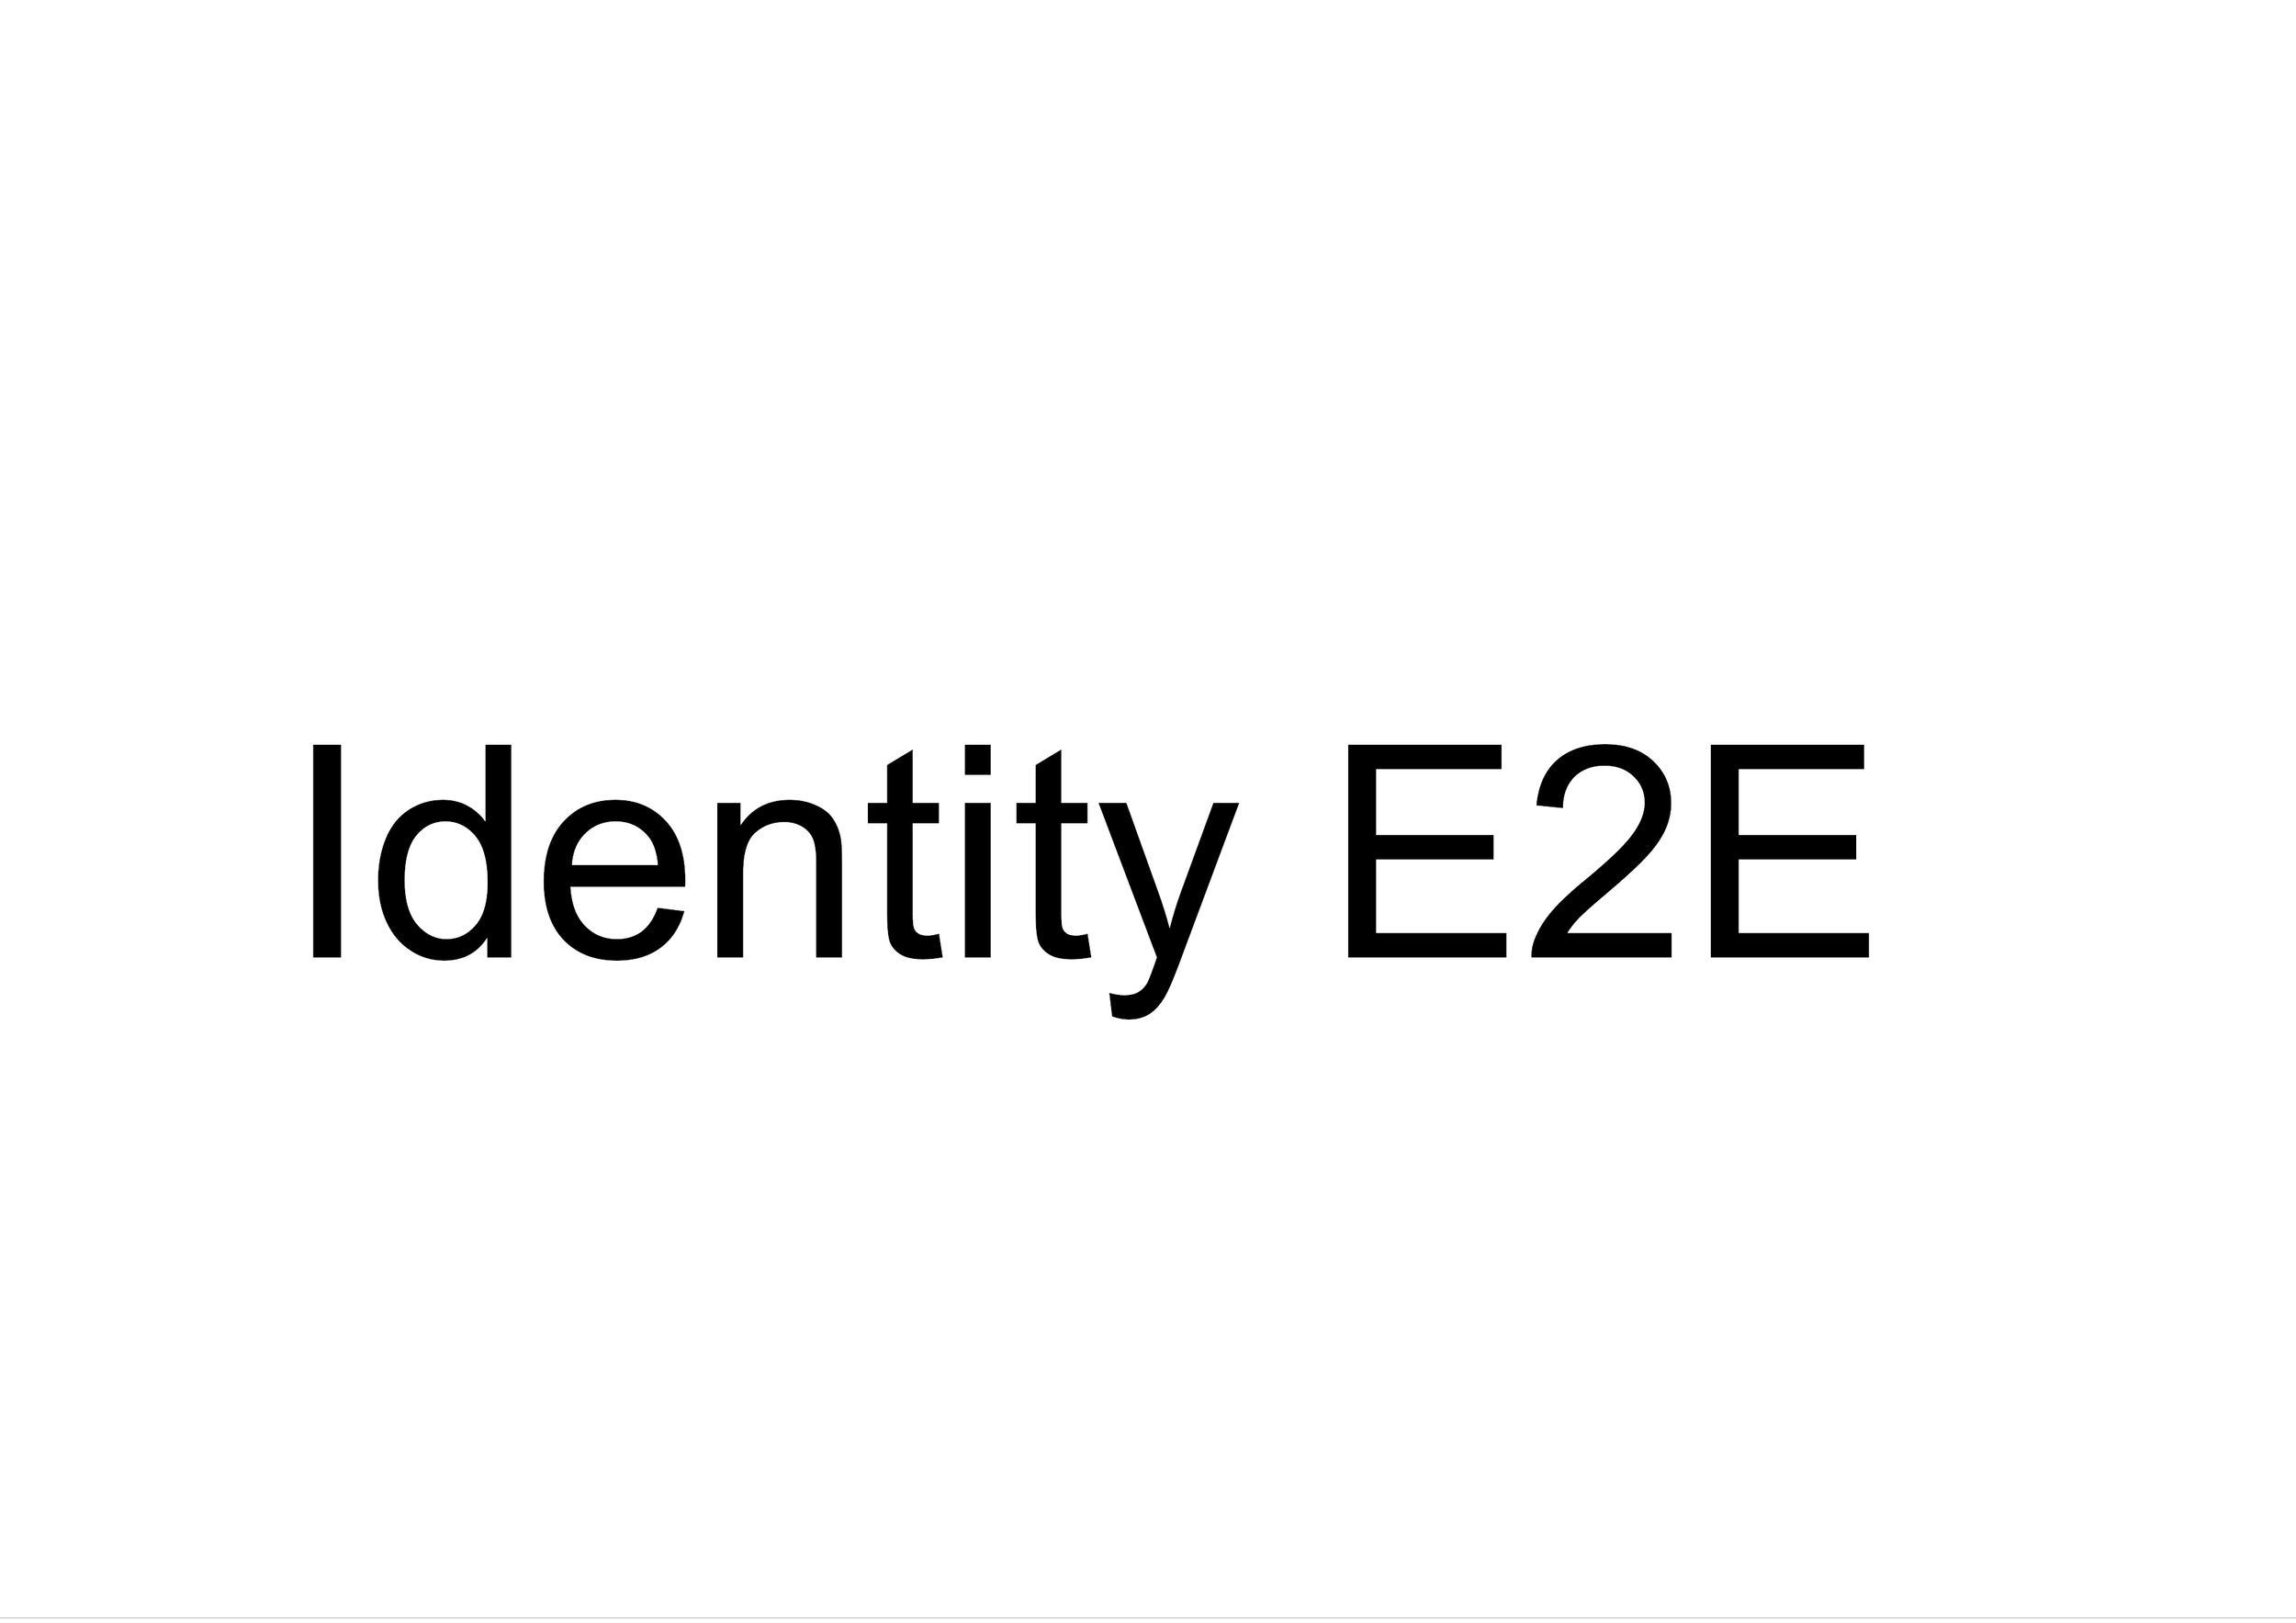 Identity E2E for the website.png